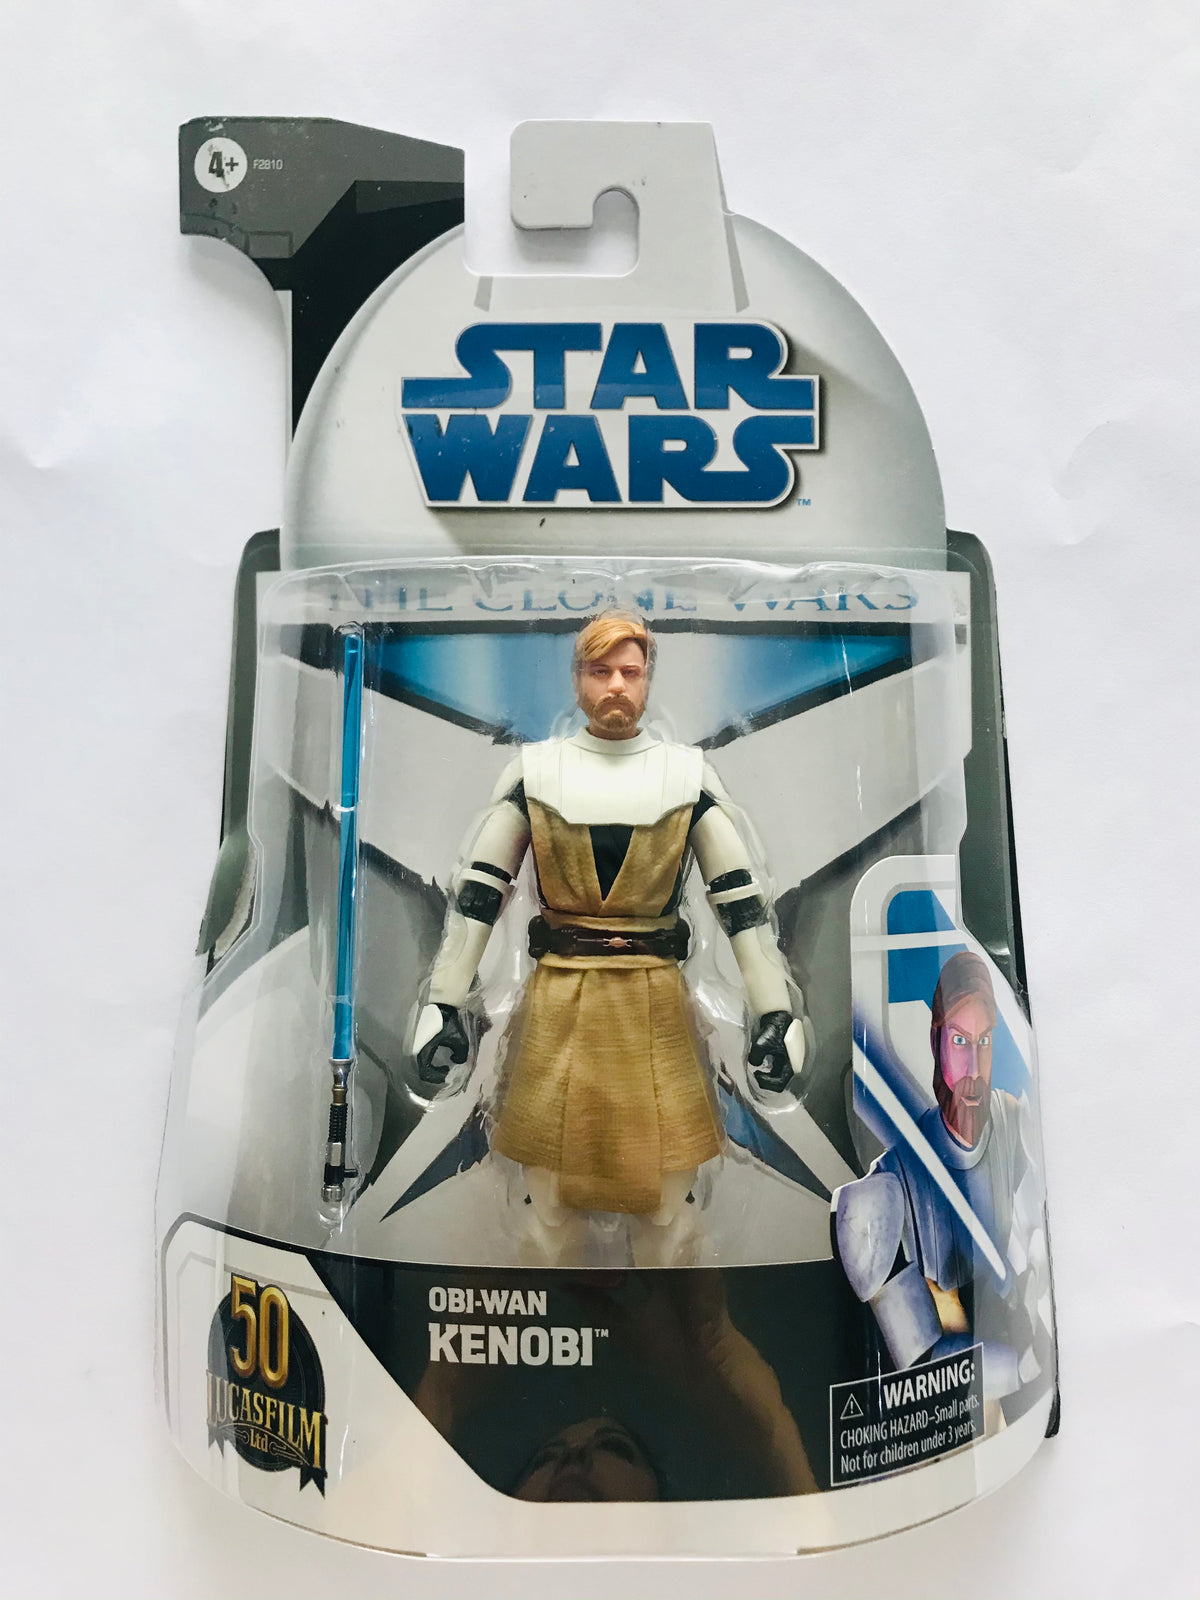 Obi-Wan Kenobi #50 Anniversary / Clone Wars